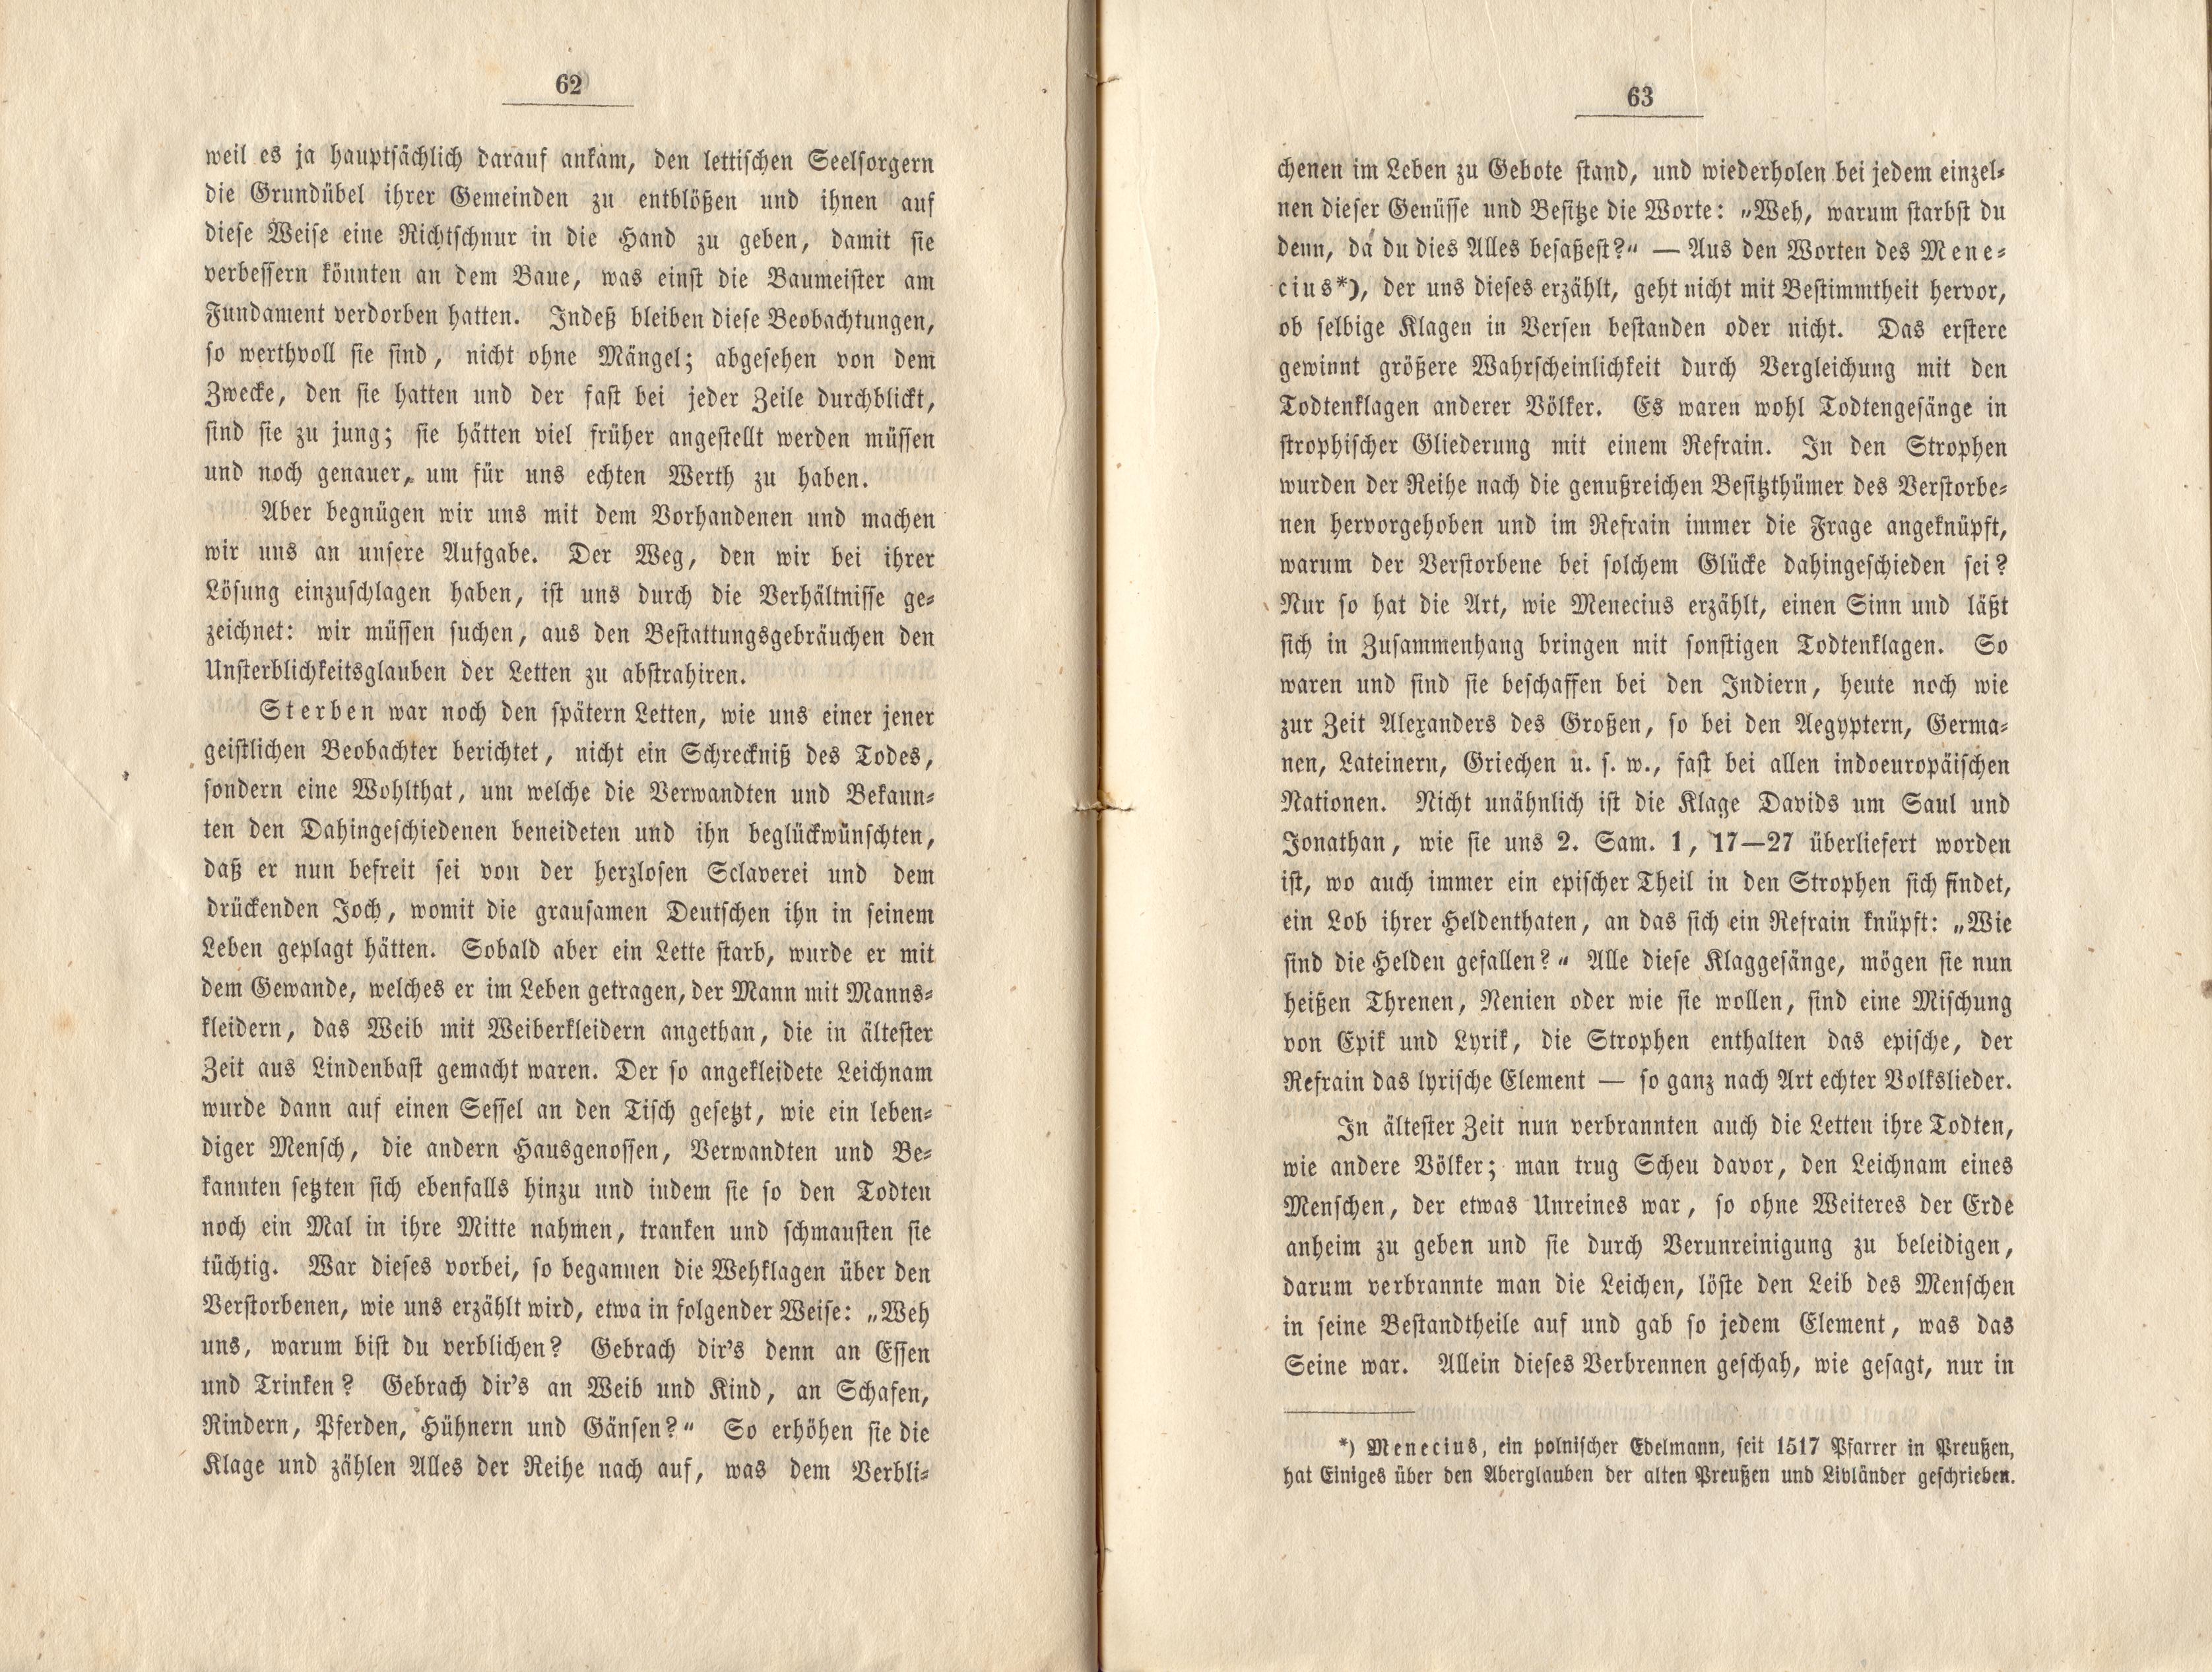 Felliner Blätter (1859) | 32. (62-63) Основной текст